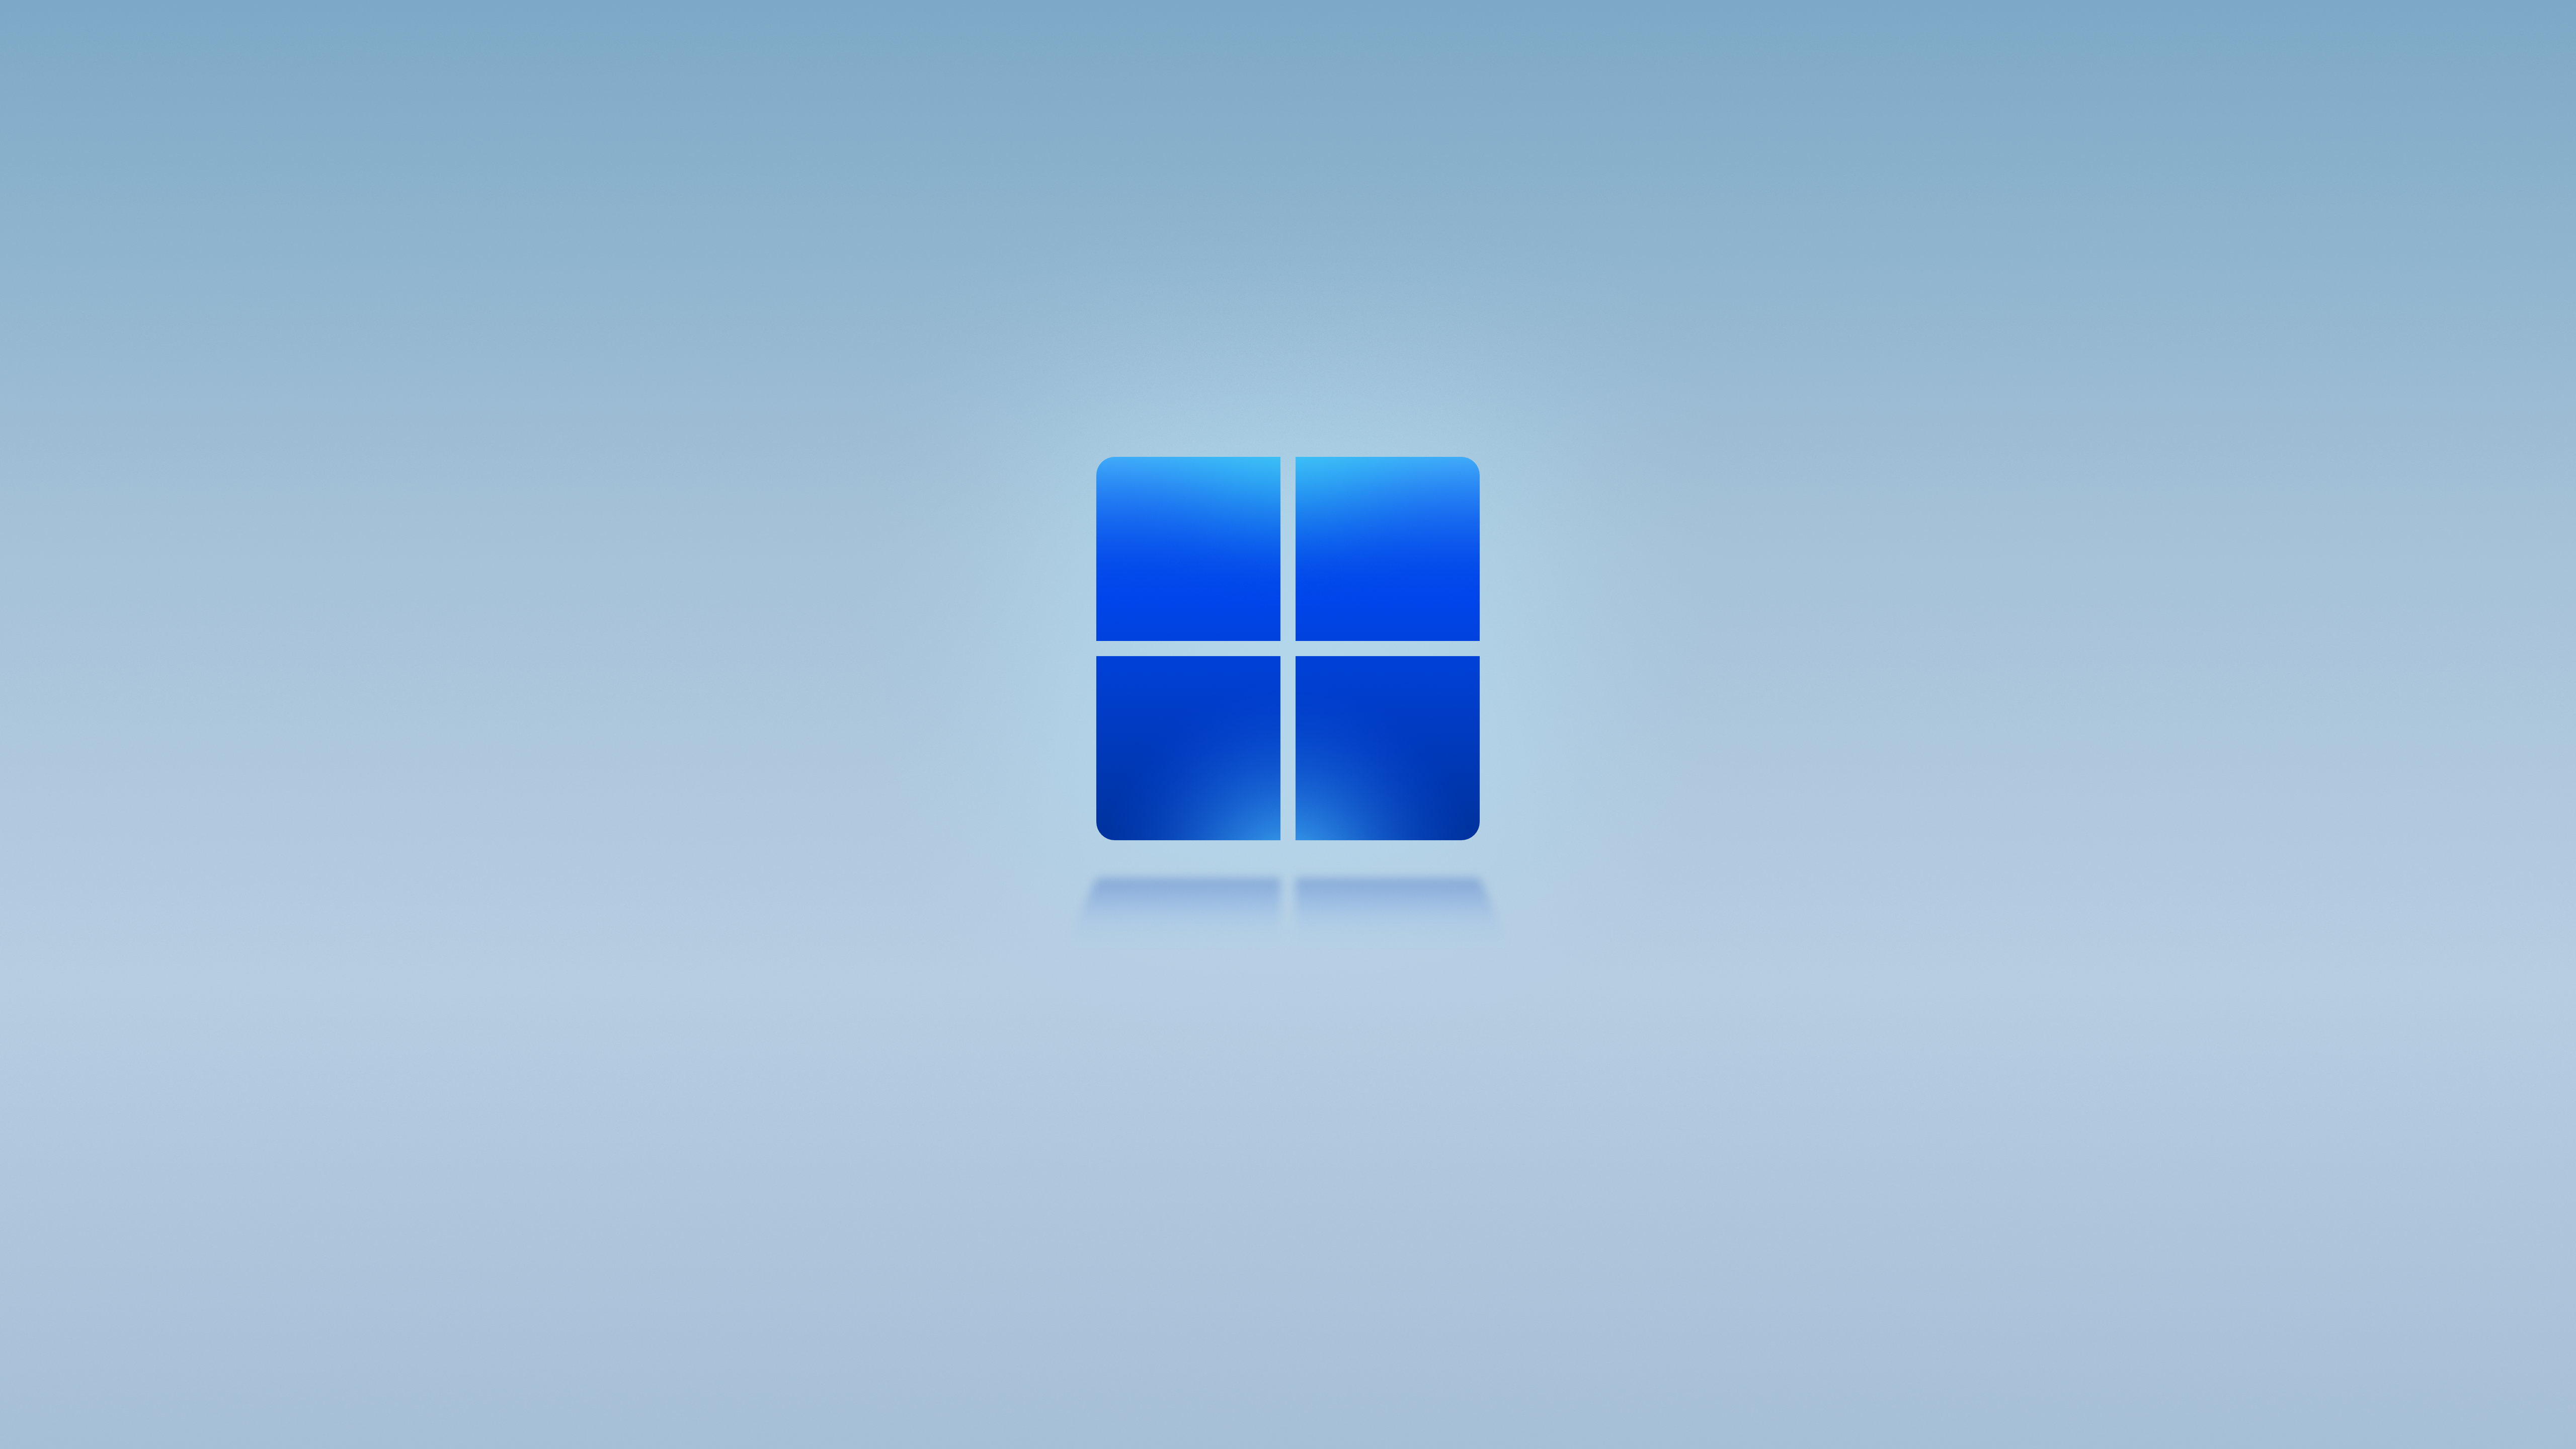 Windows 11 4k Ultra HD Wallpaper by dpcdpc11